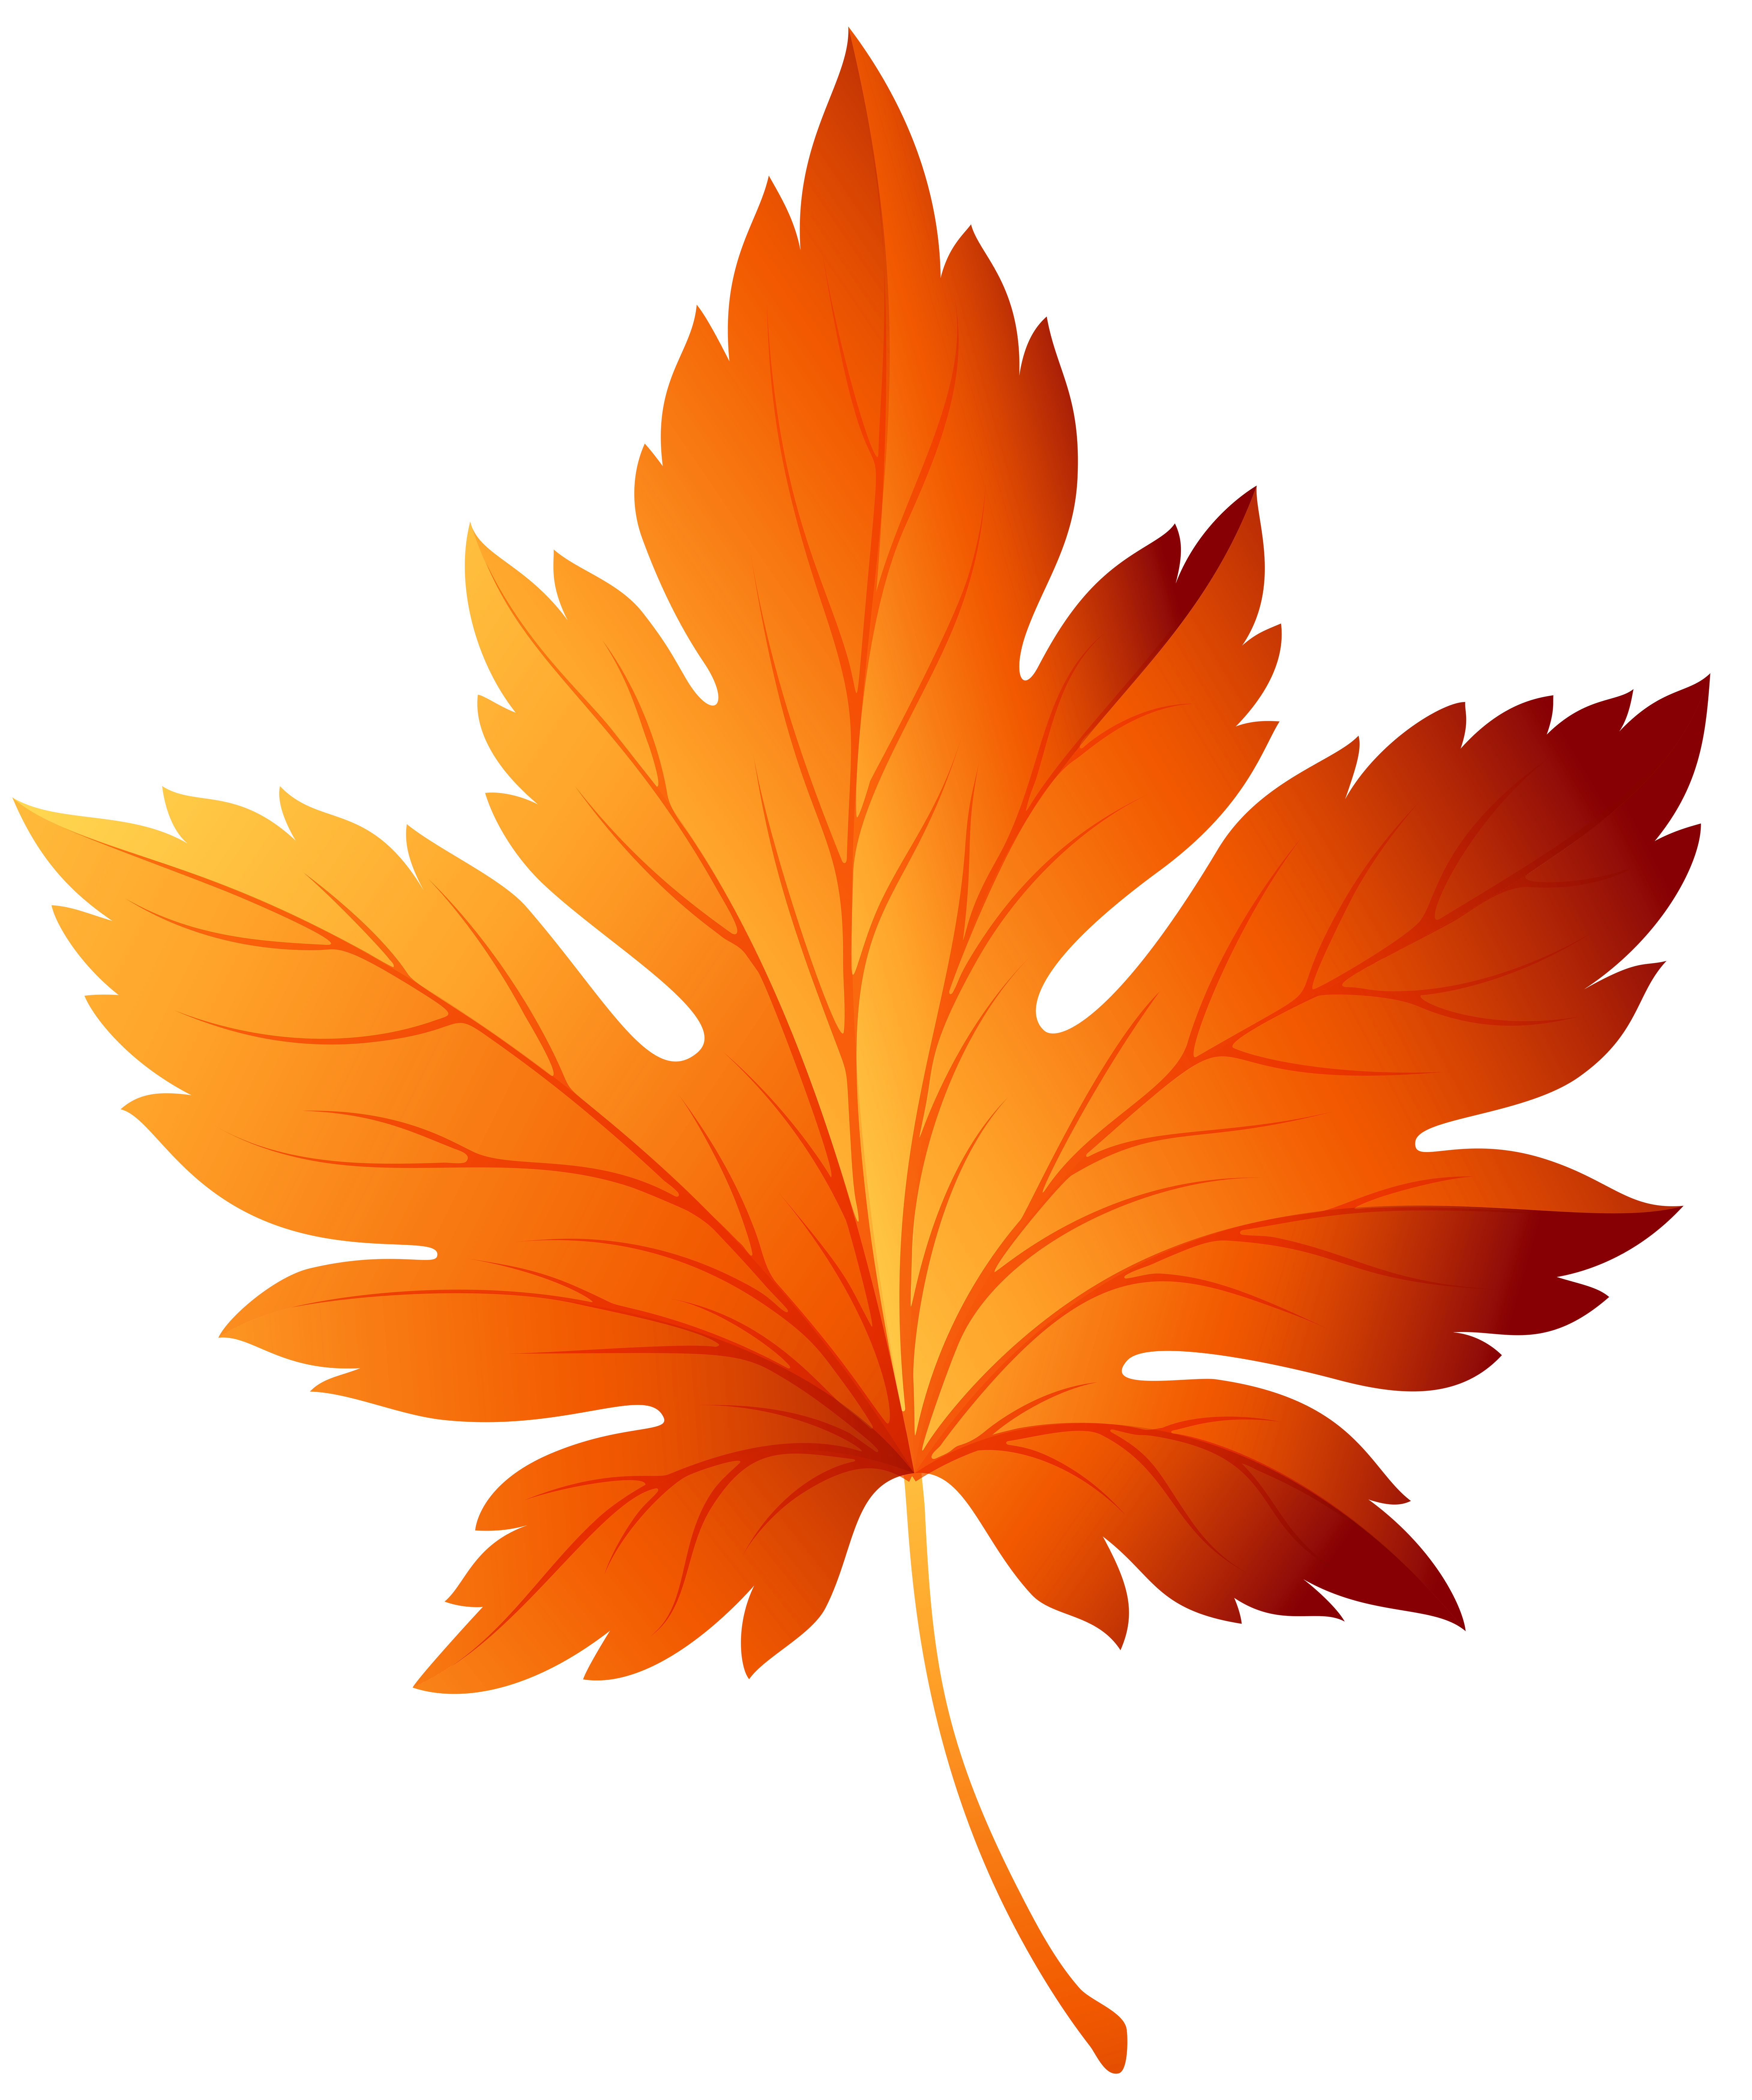 Autumn Leaf Transparent PNG Clip Art Image | Gallery Yopriceville ...